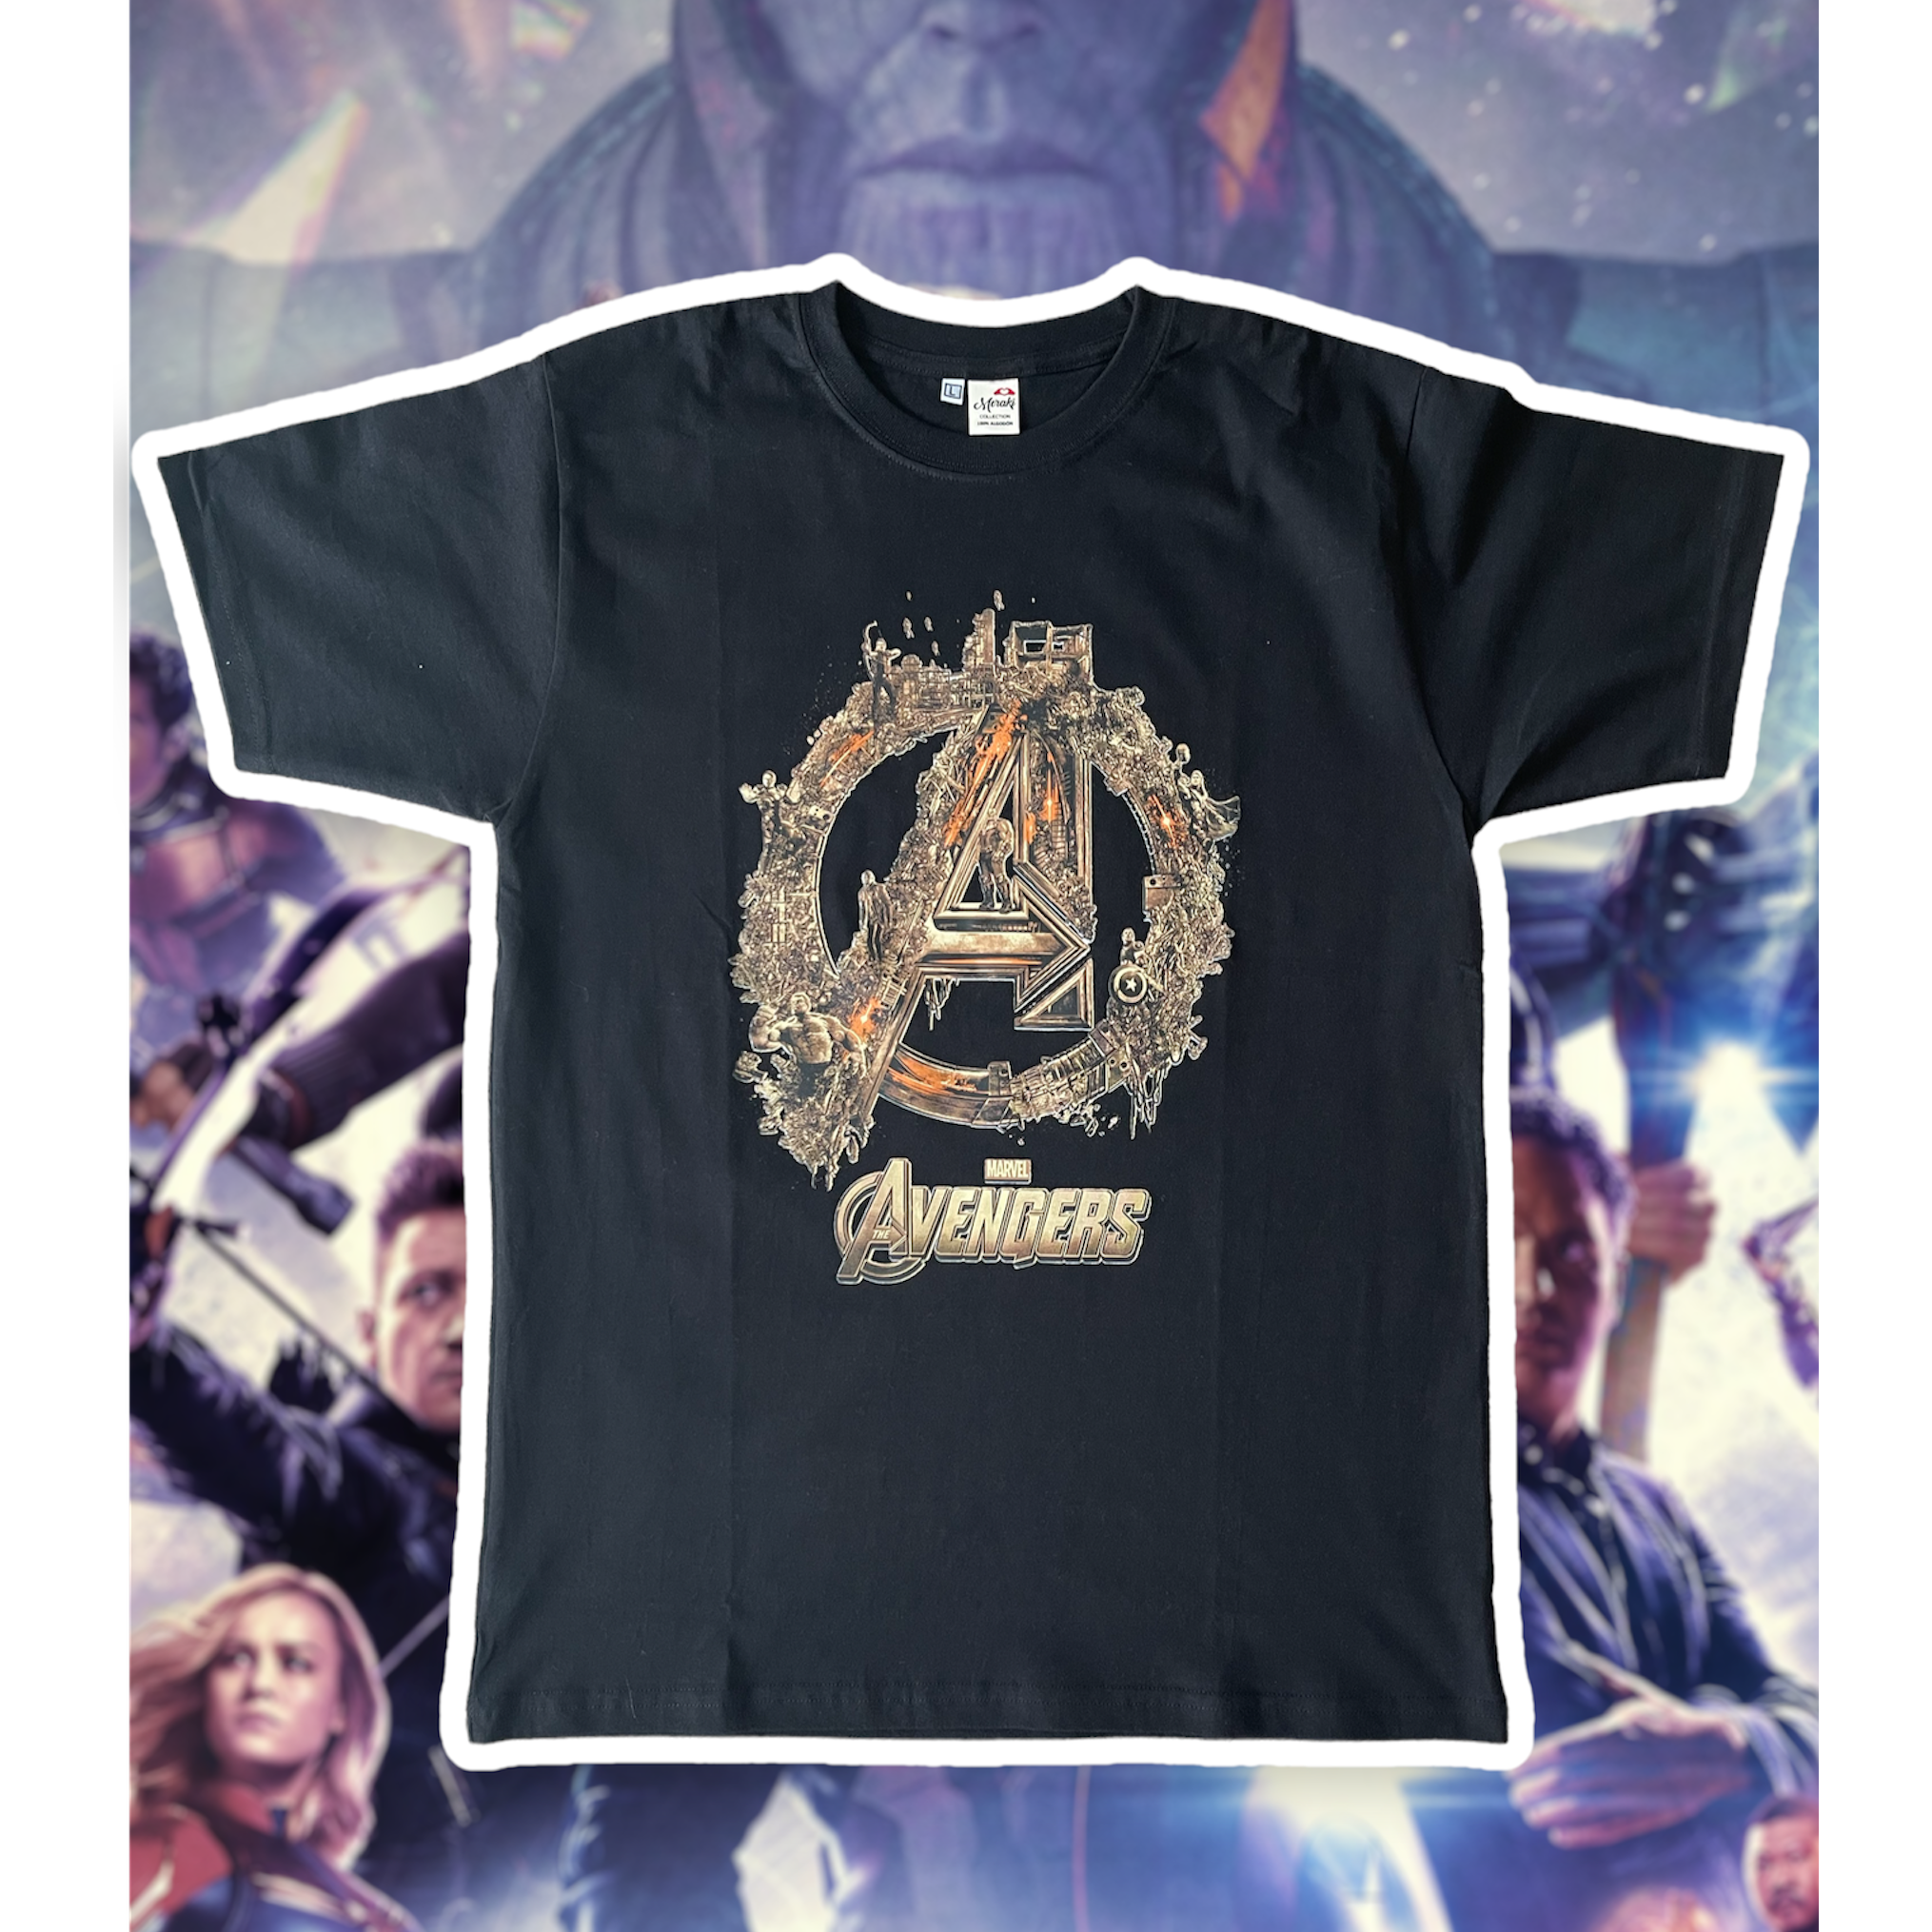 T-shirt modelo Avengers talla L